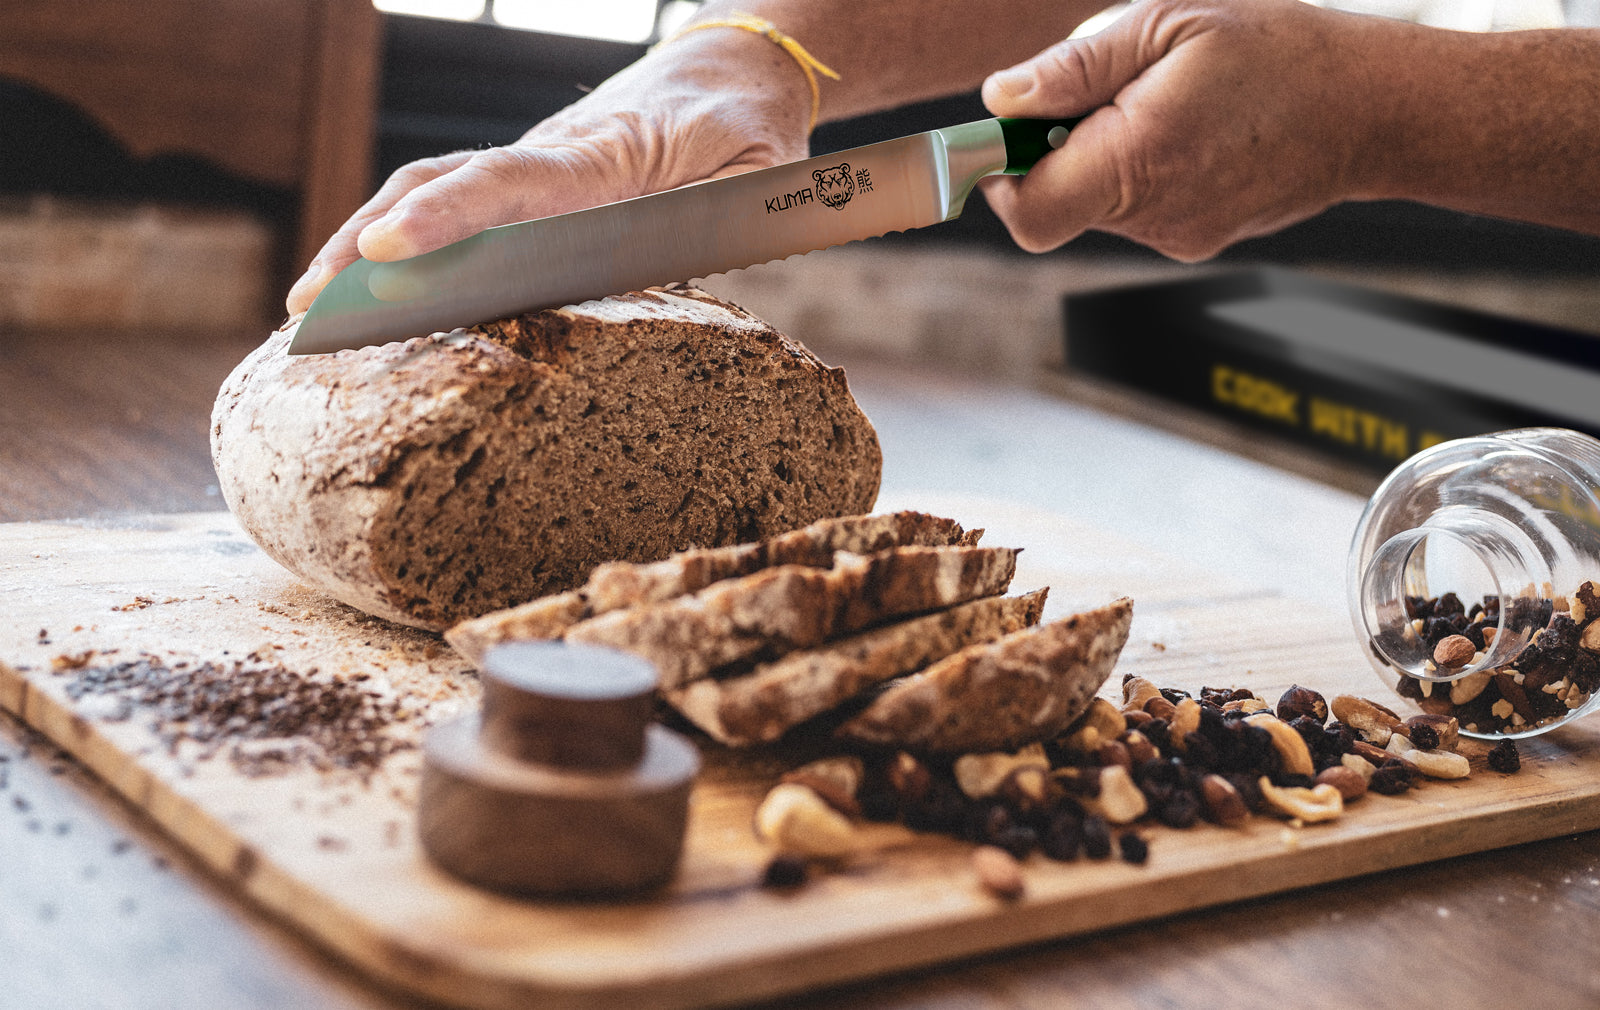 8Inch Best Serrated Bread Knife Cake Cutting Knife Long Baguette